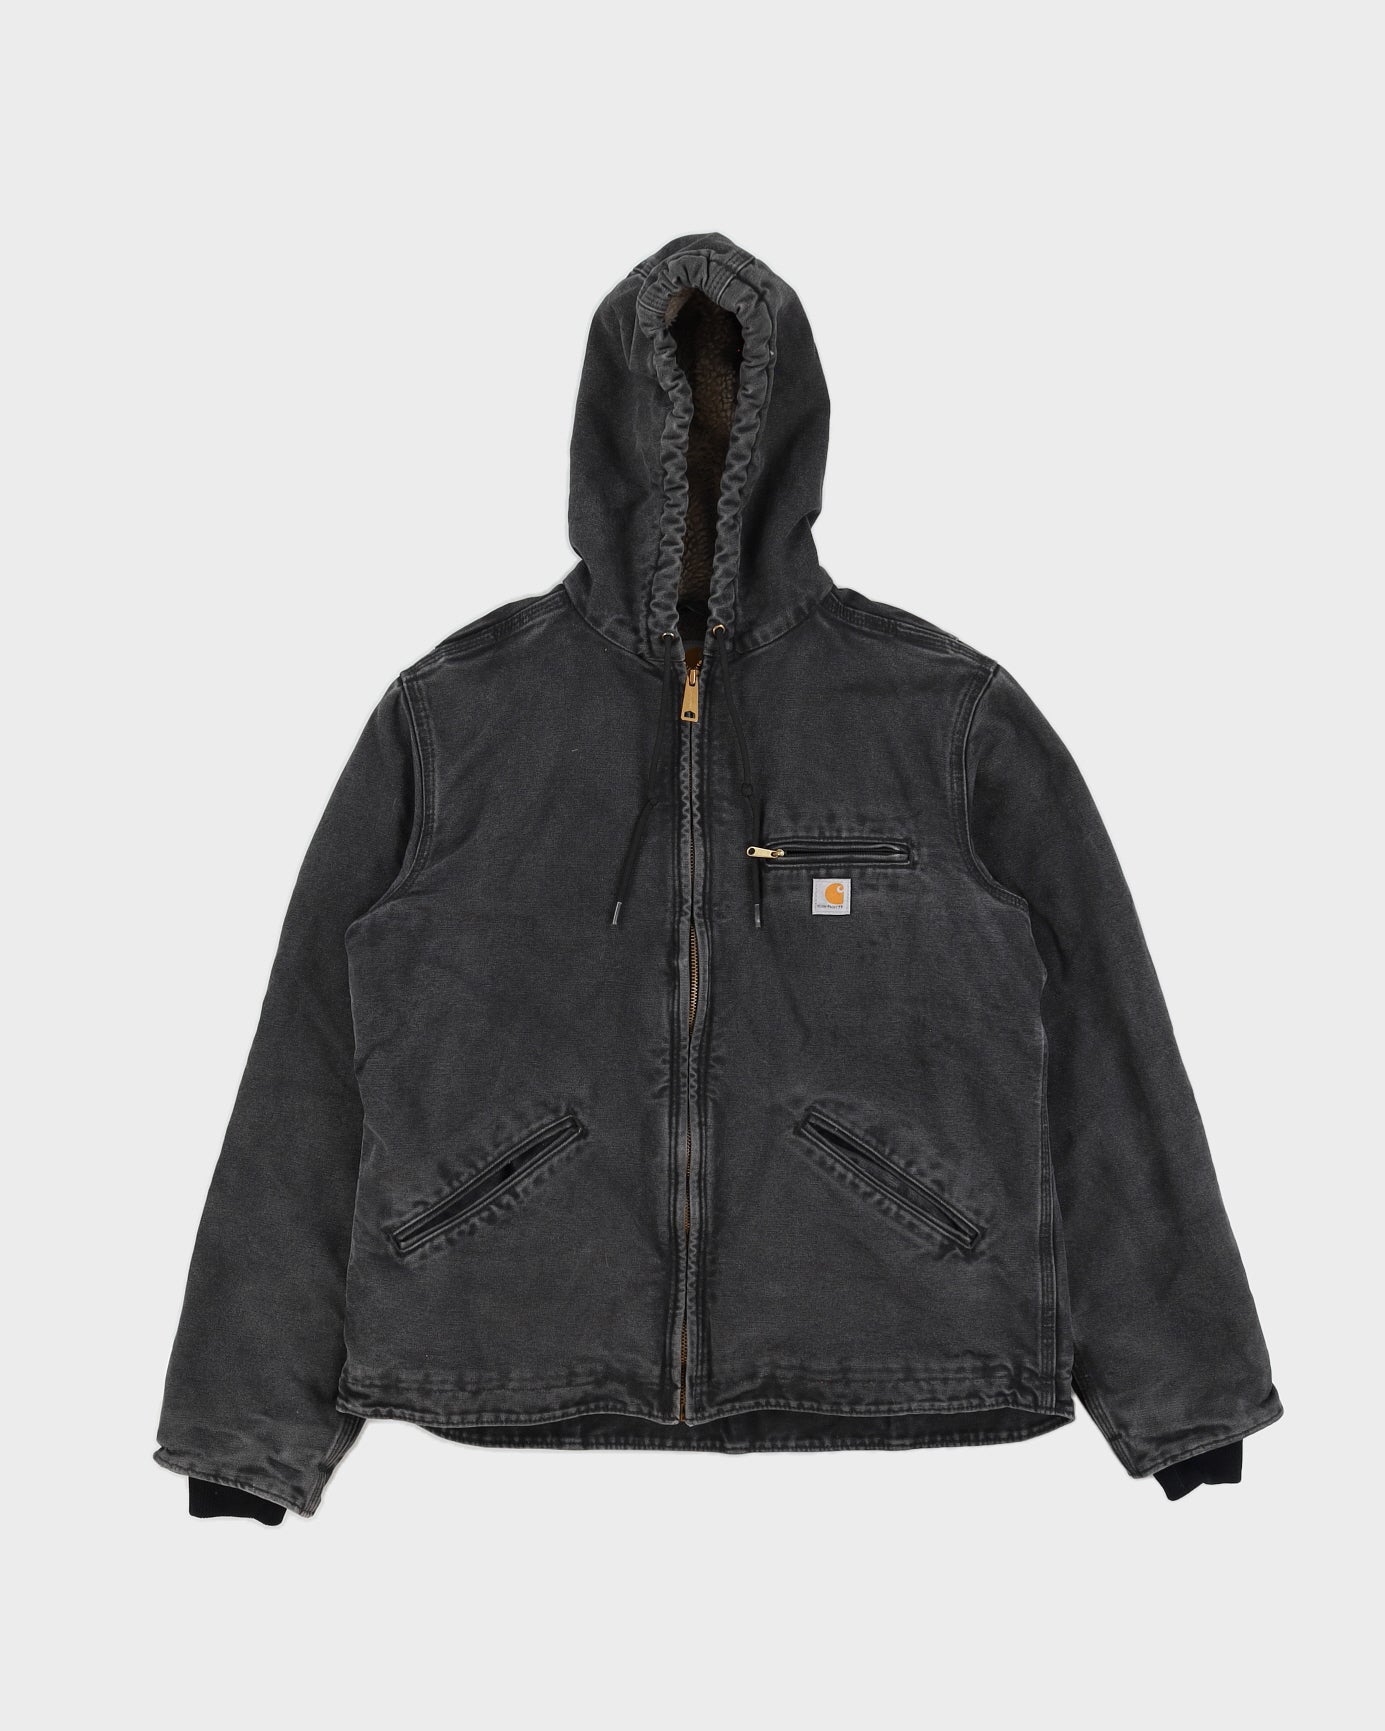 Carhartt Washed Black Fleece Lined Hooded Jacket - S